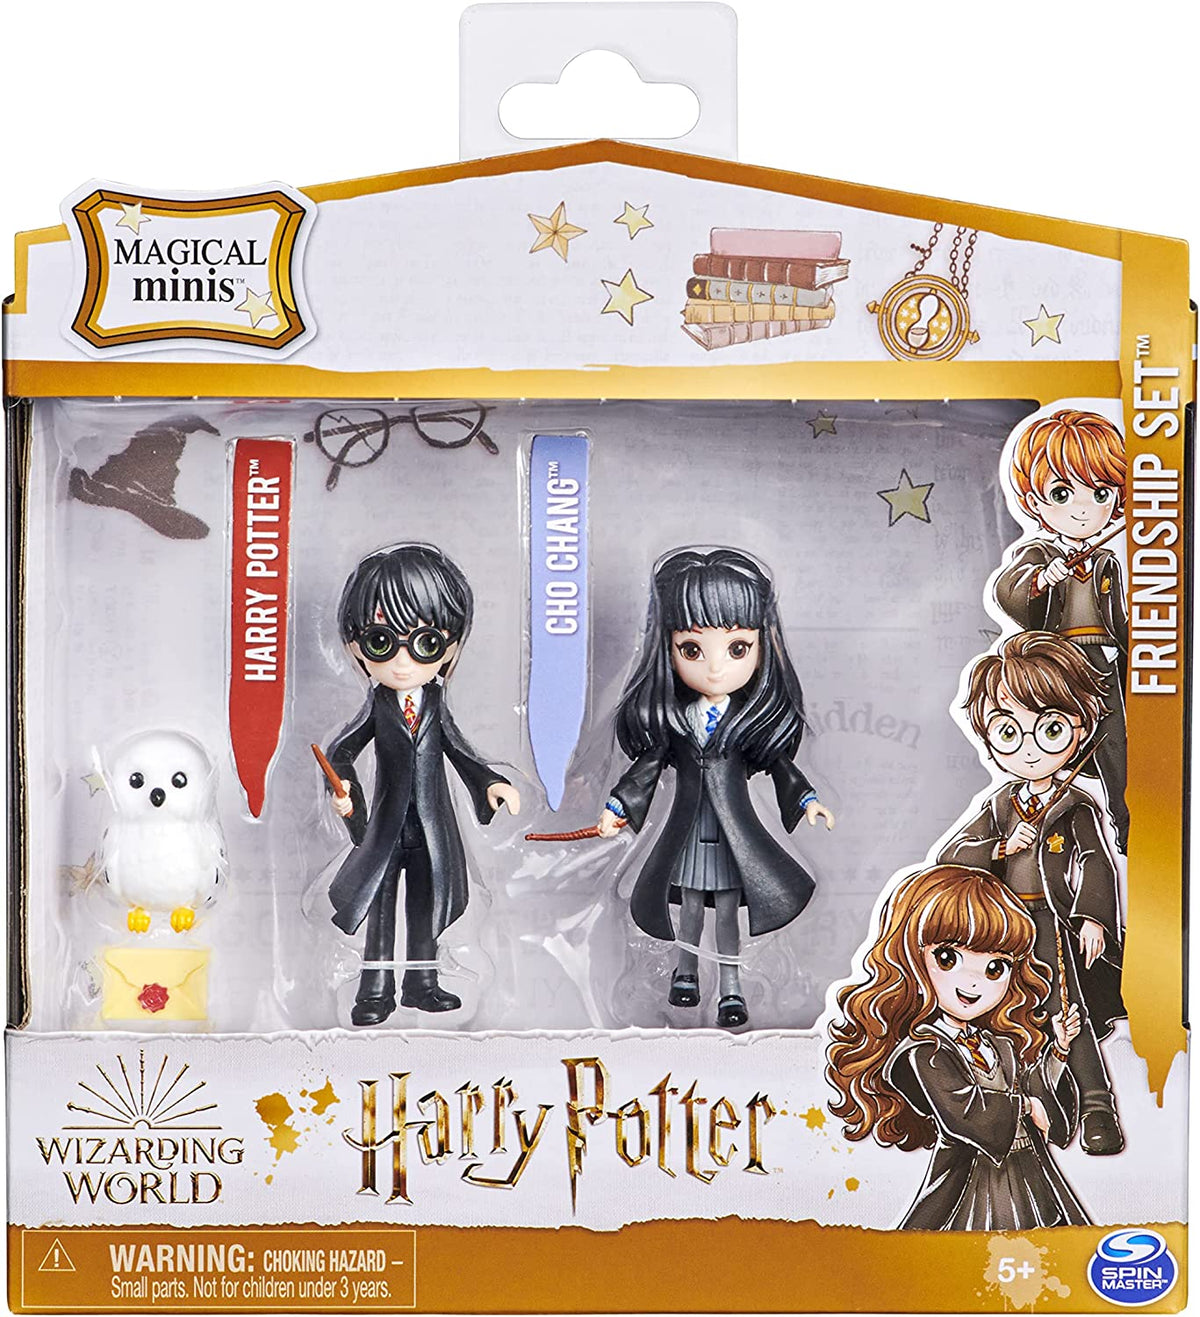 Wizarding World Magical Mini Friendship Pack -H